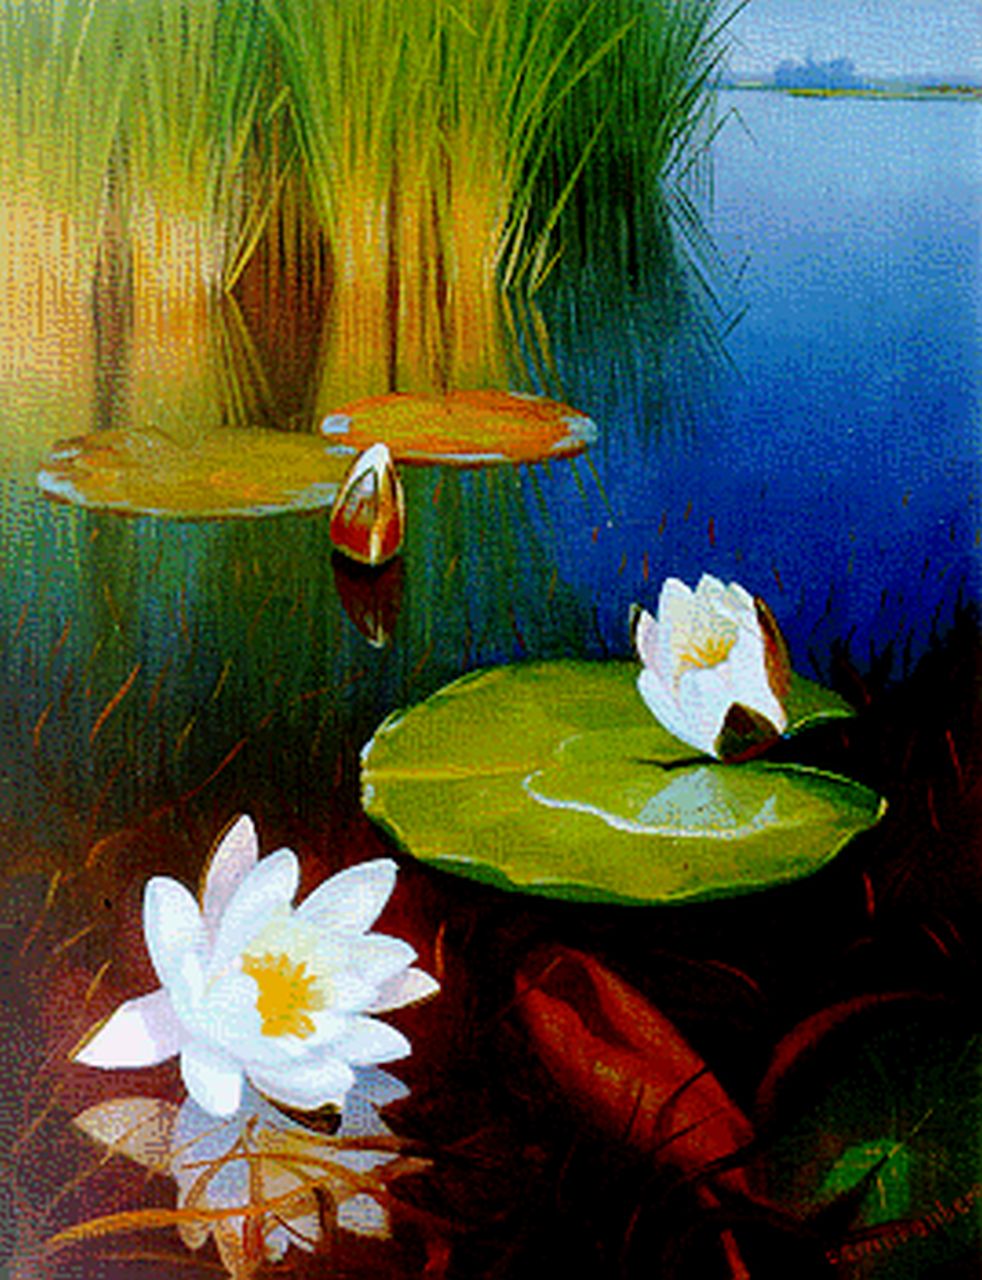 Smorenberg D.  | Dirk Smorenberg, The Loosdrechtse Plassen with water lilies, oil on canvas 50.5 x 39.0 cm, signed l.r.